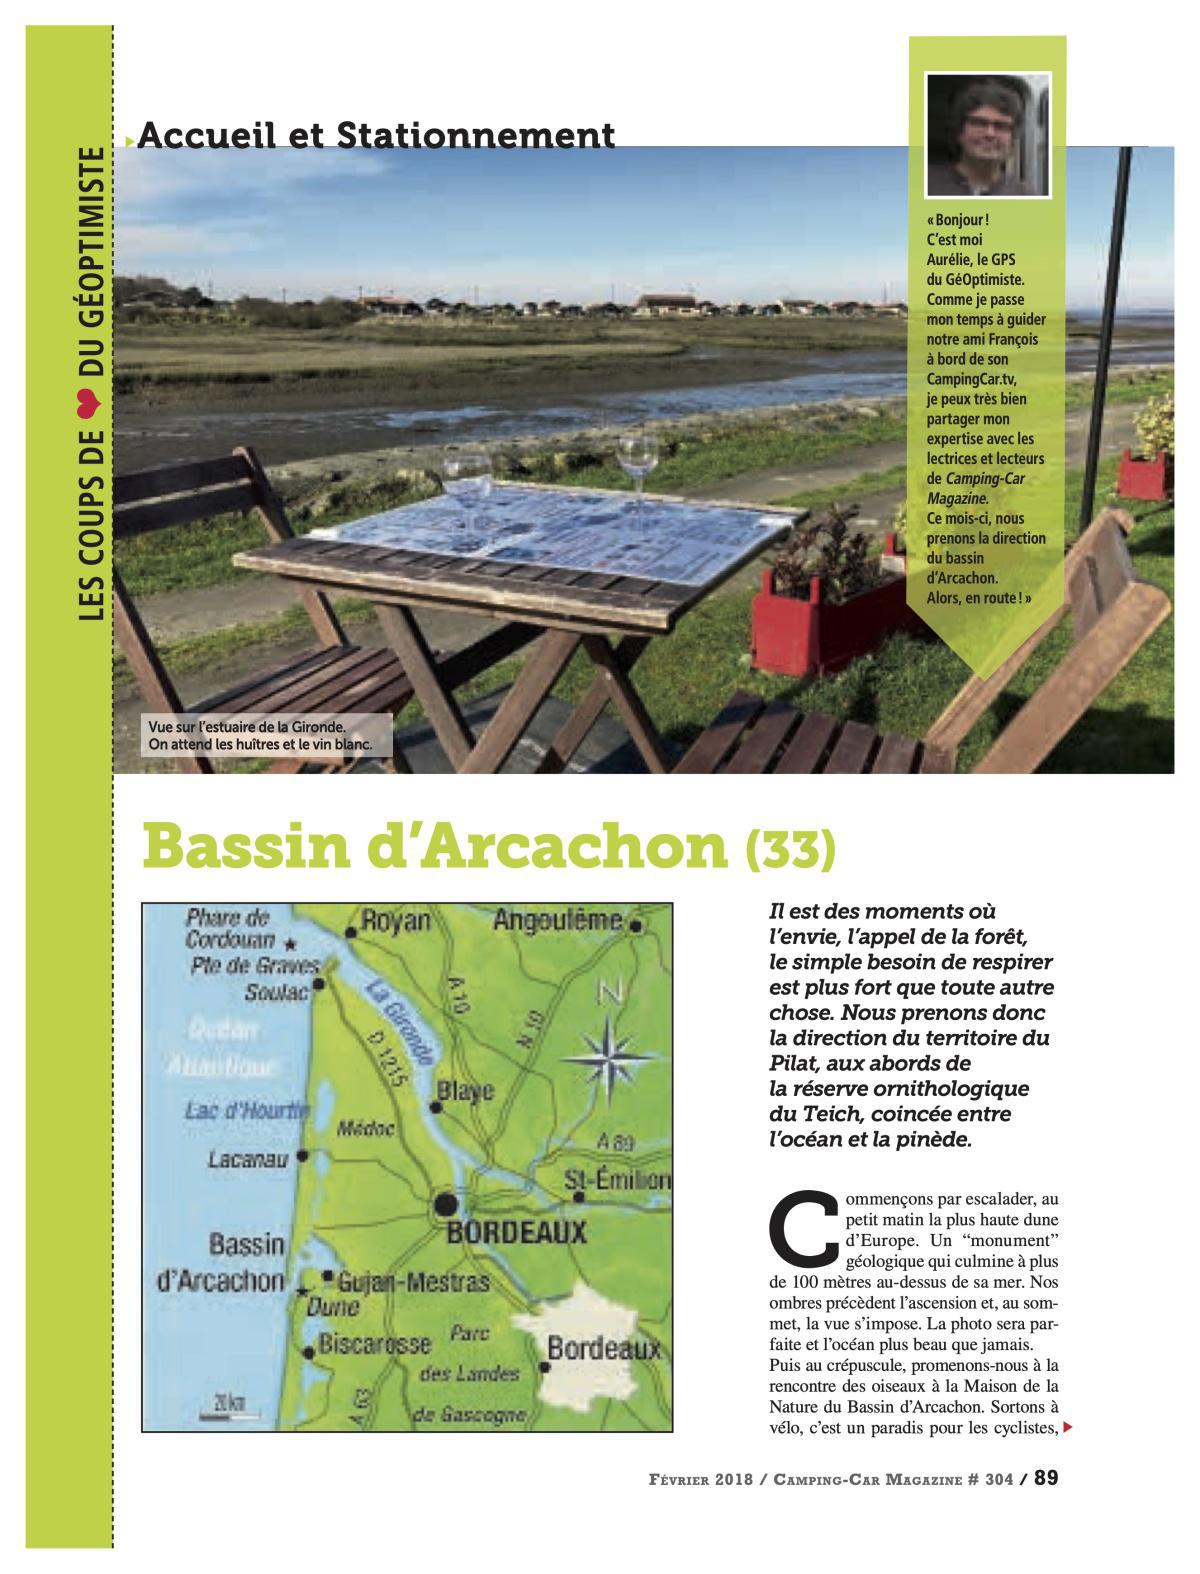 Bassin d'Arcachon - CCM 304